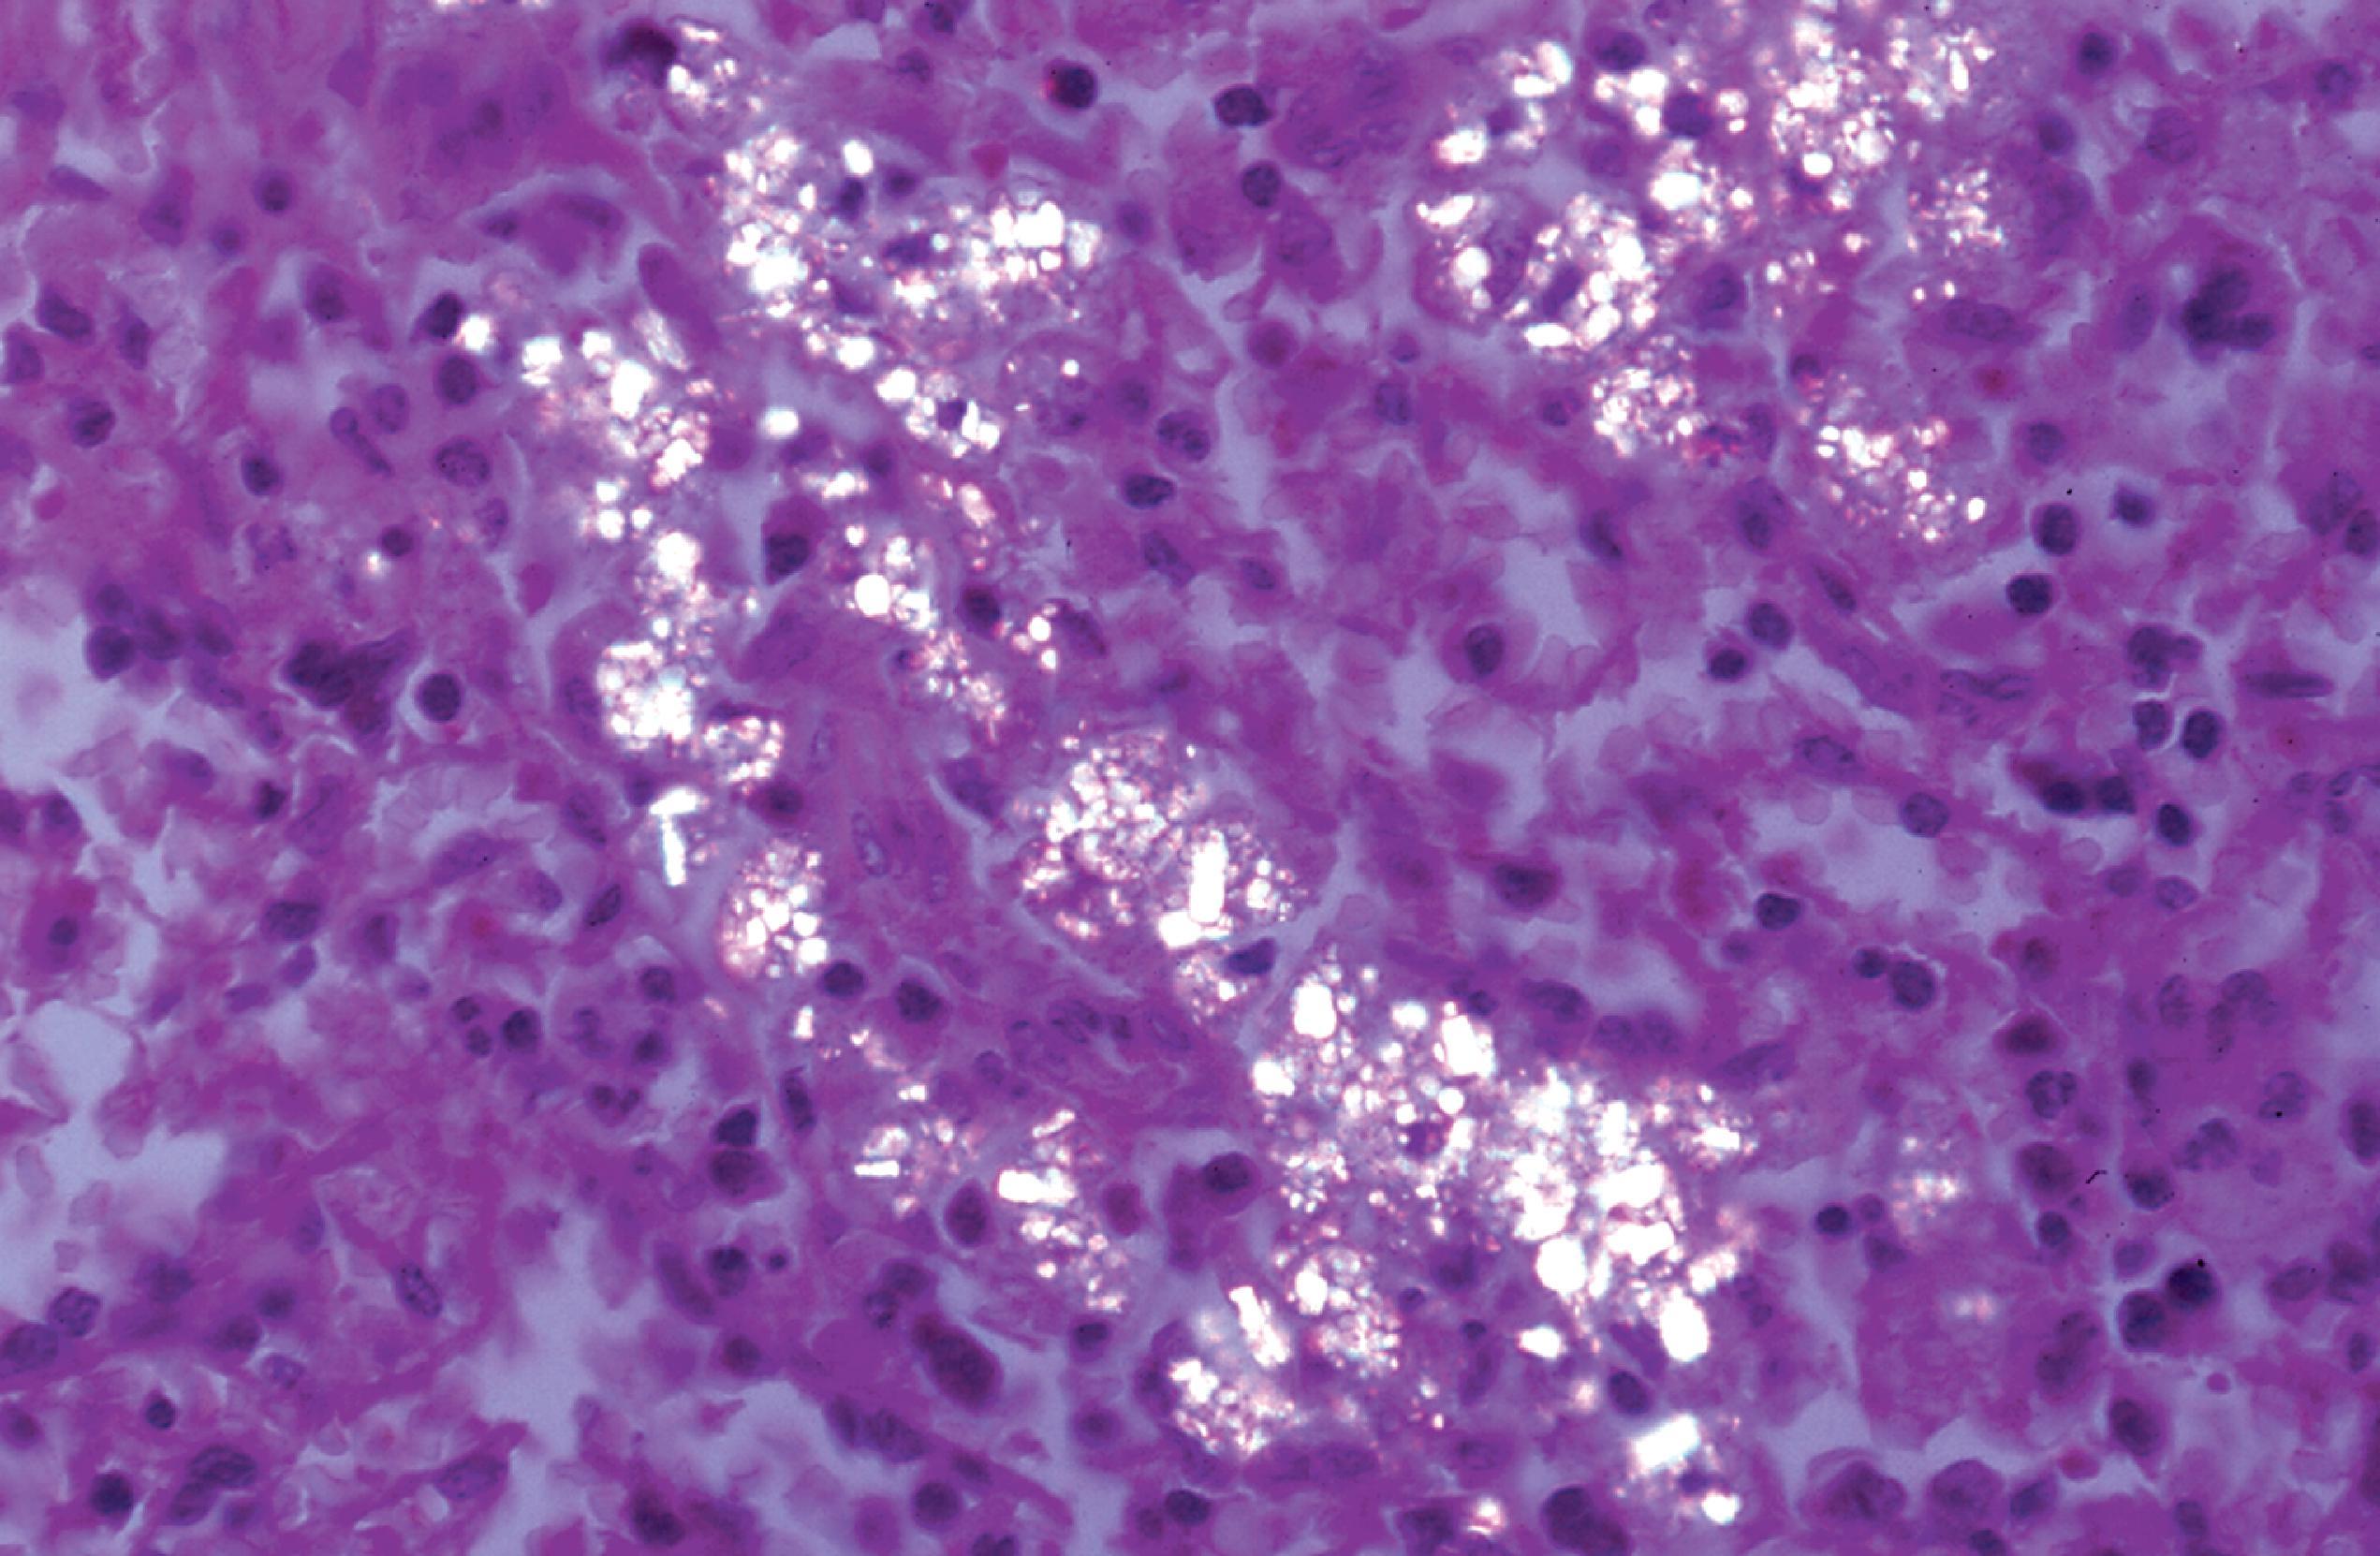 FIGure 8.2, Cystinosis. Birefringent cystine crystals in the kidney.